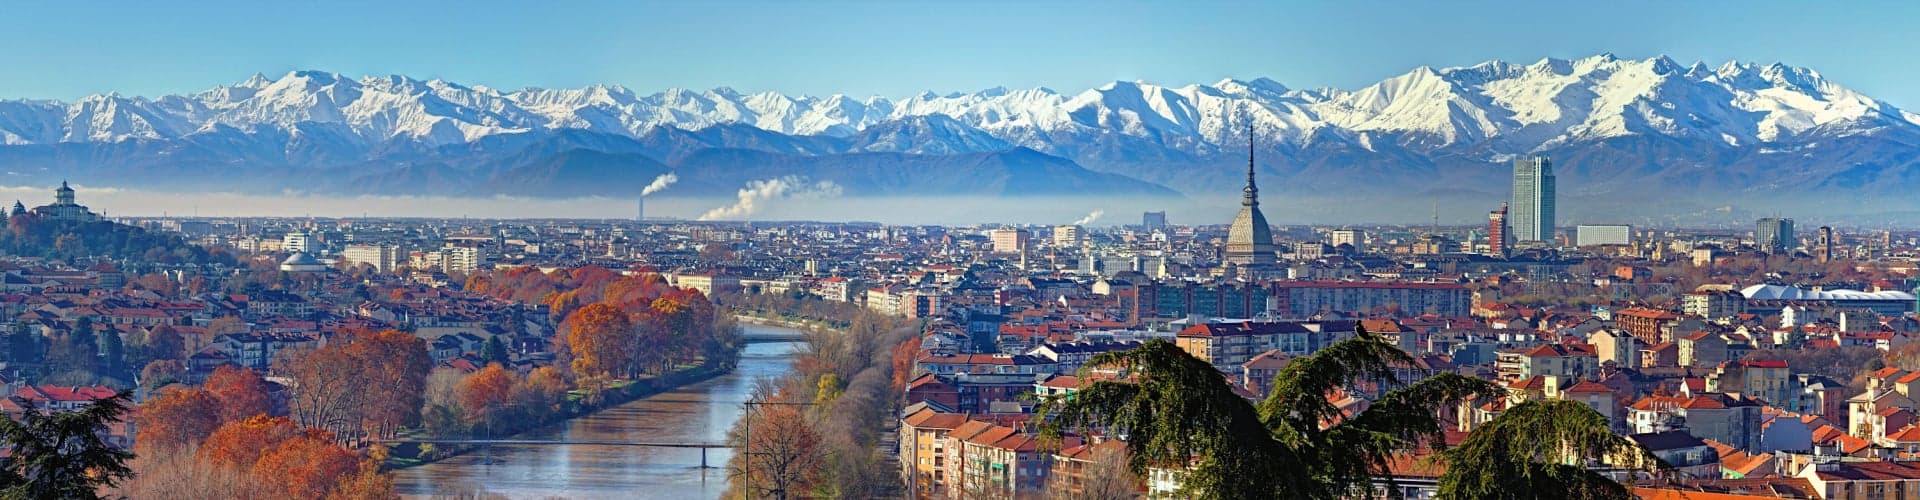 Turin Skyline